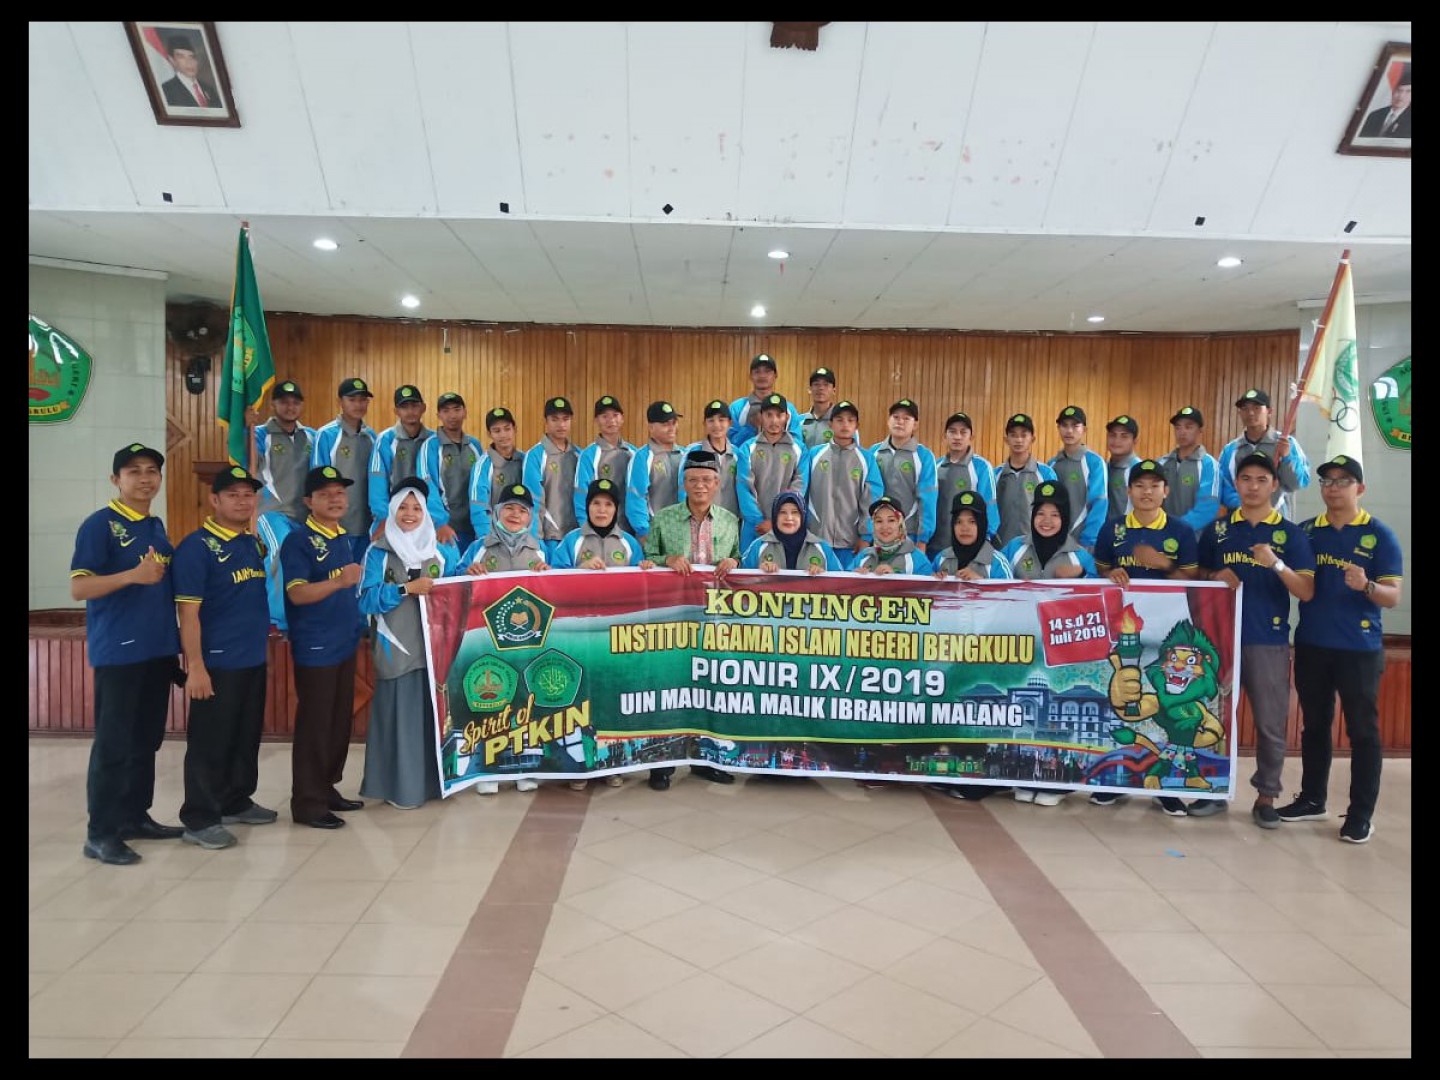 Usung Tema "Spirit of Unity" Kemenag Gelar PIONIR di Malang